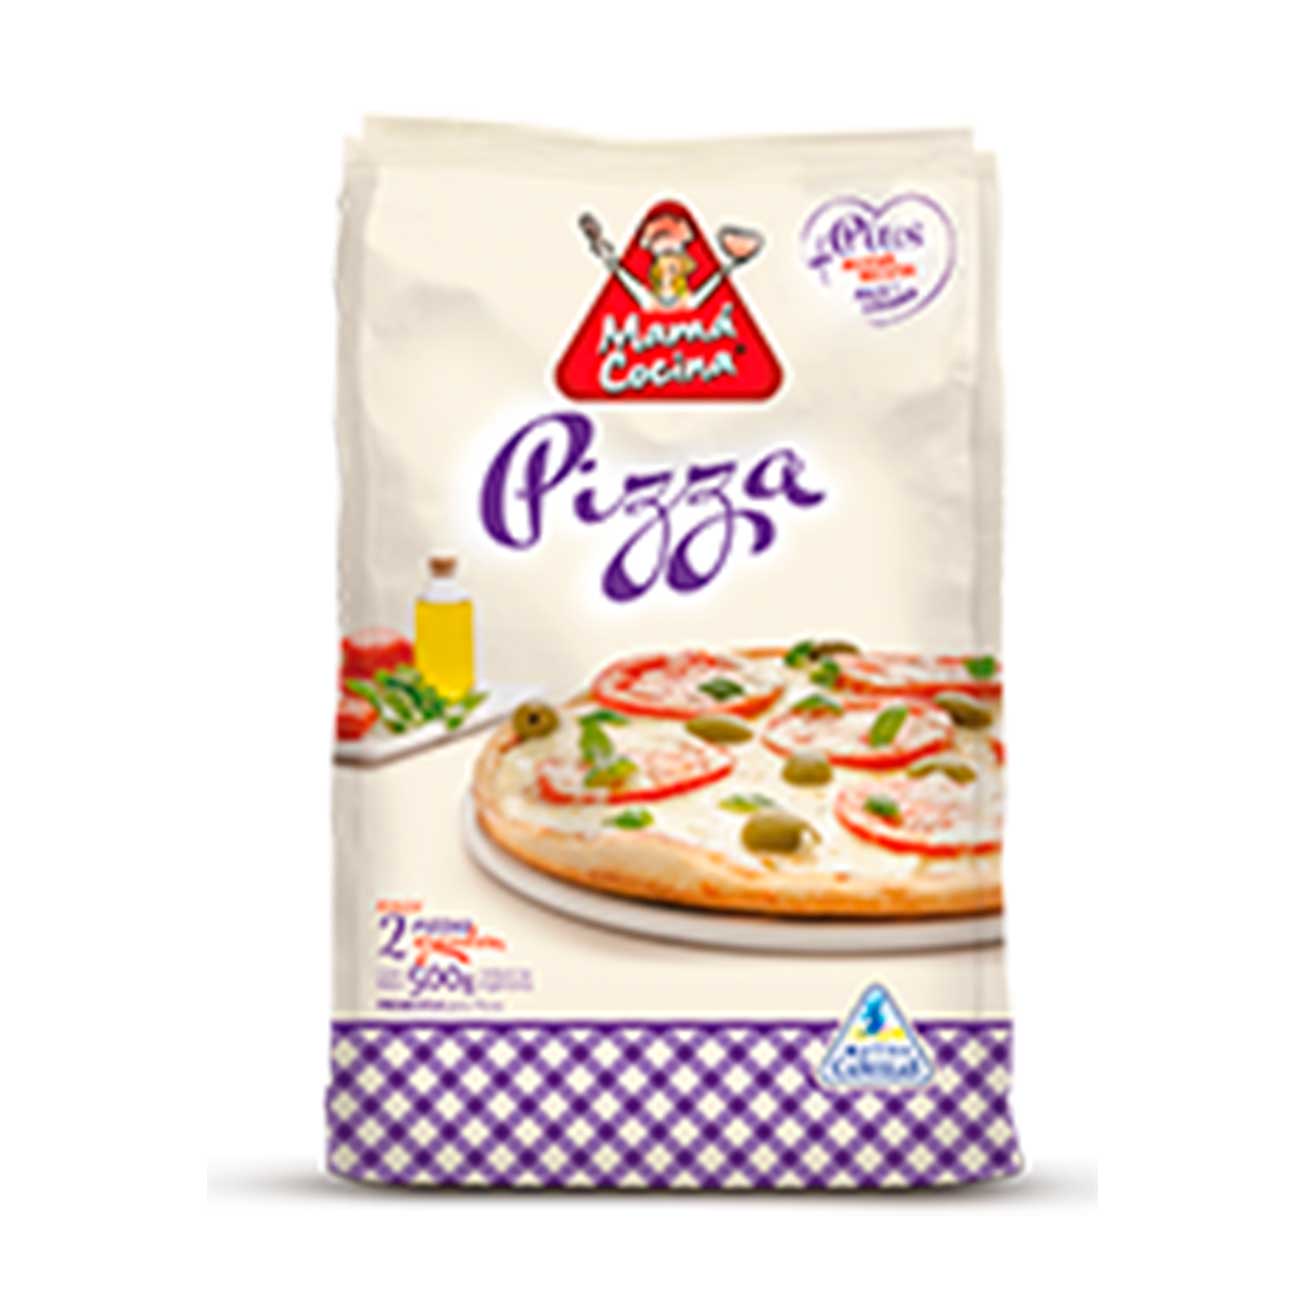 Premezcla pizza 500g MAMÁ COCINA PLUS